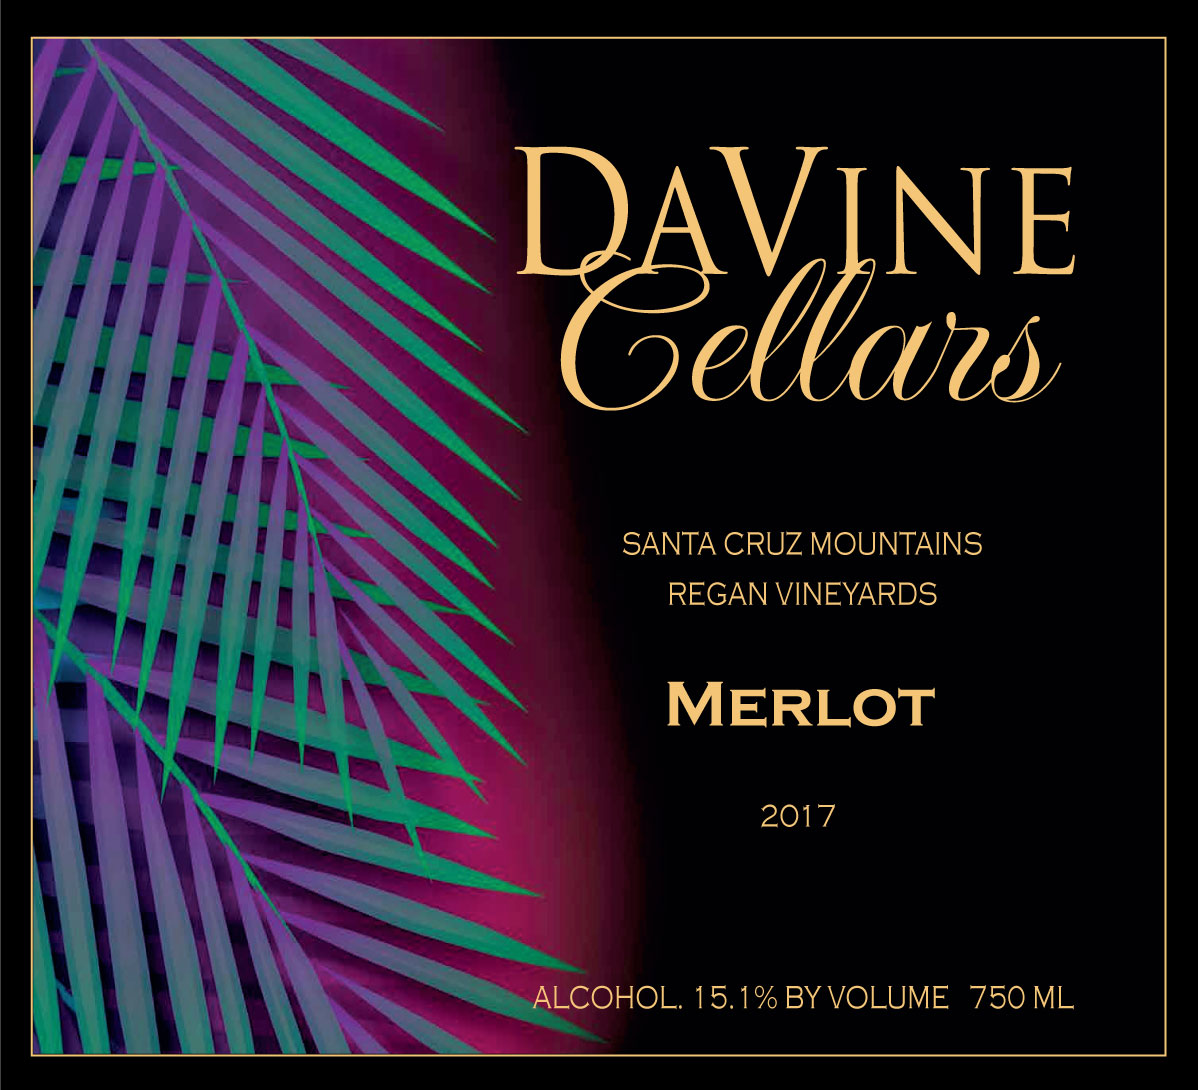 Product Image for 2017 Santa Cruz Mountains Merlot "Elegant" 